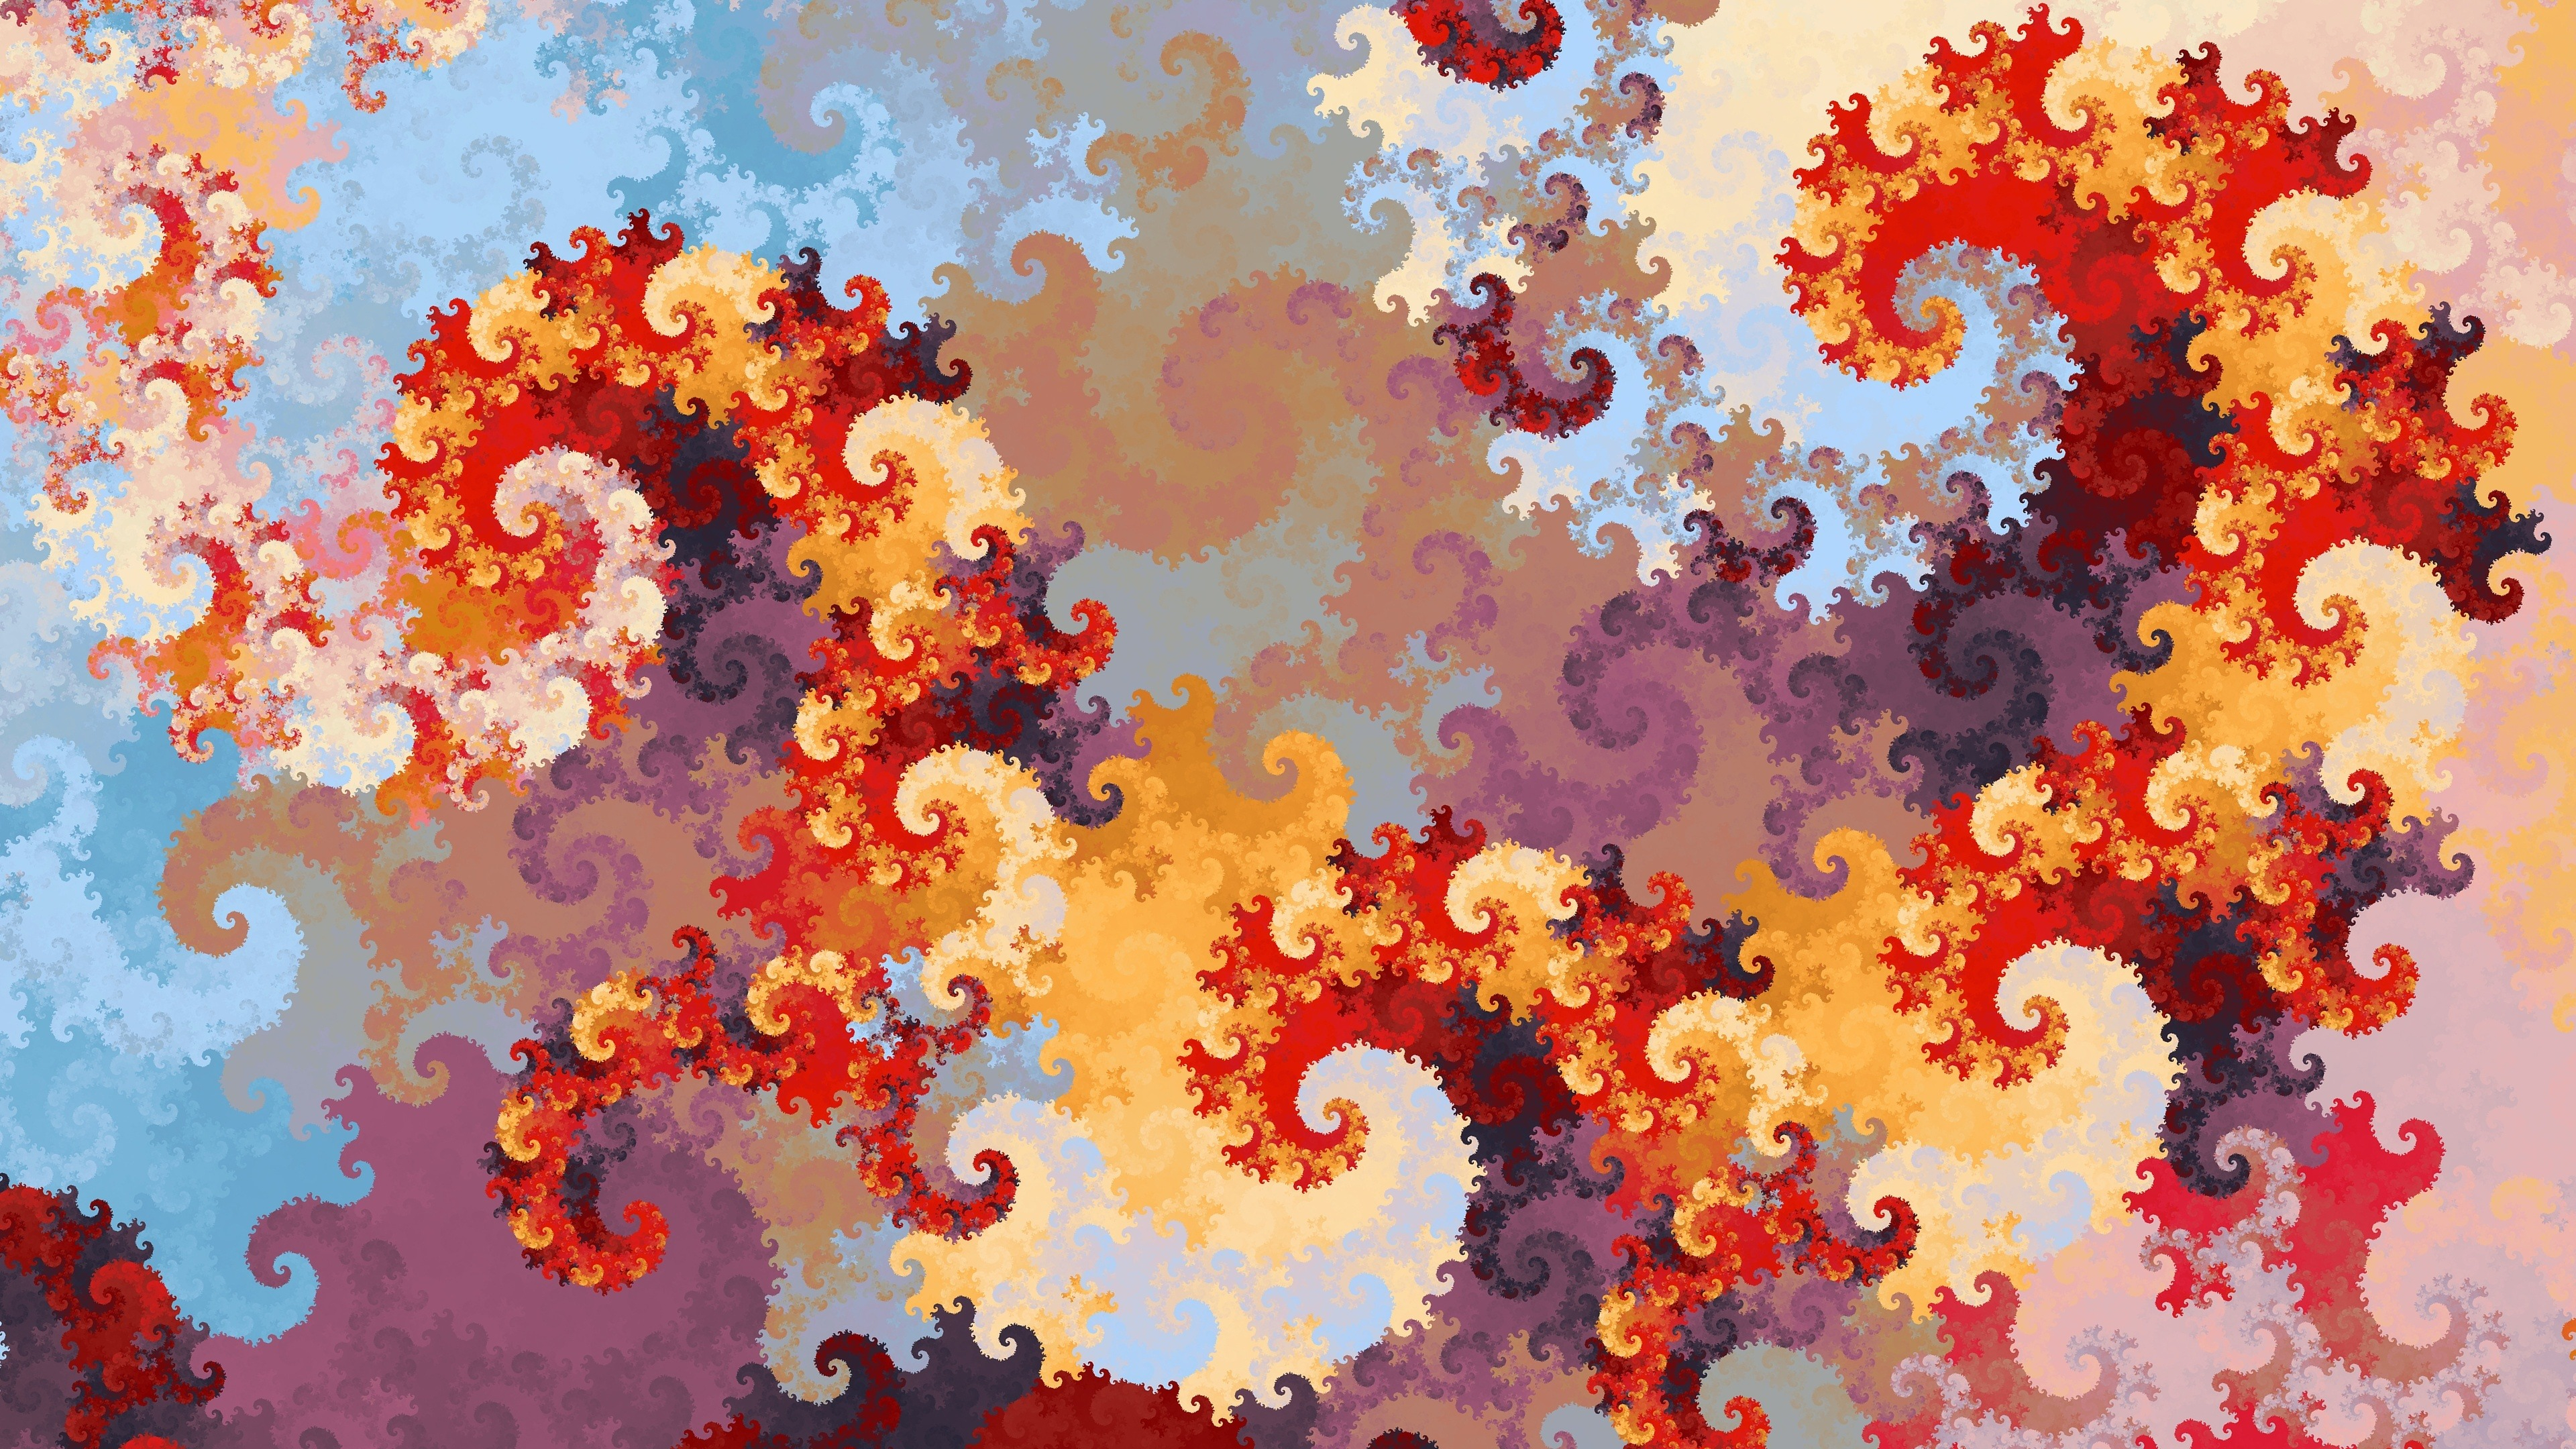 3840x2160 Download wallpaper swirl, abstract, fractal, pattern 4k wallpaper, uhd wallpaper, 16:9 widescreen hd background, 3078